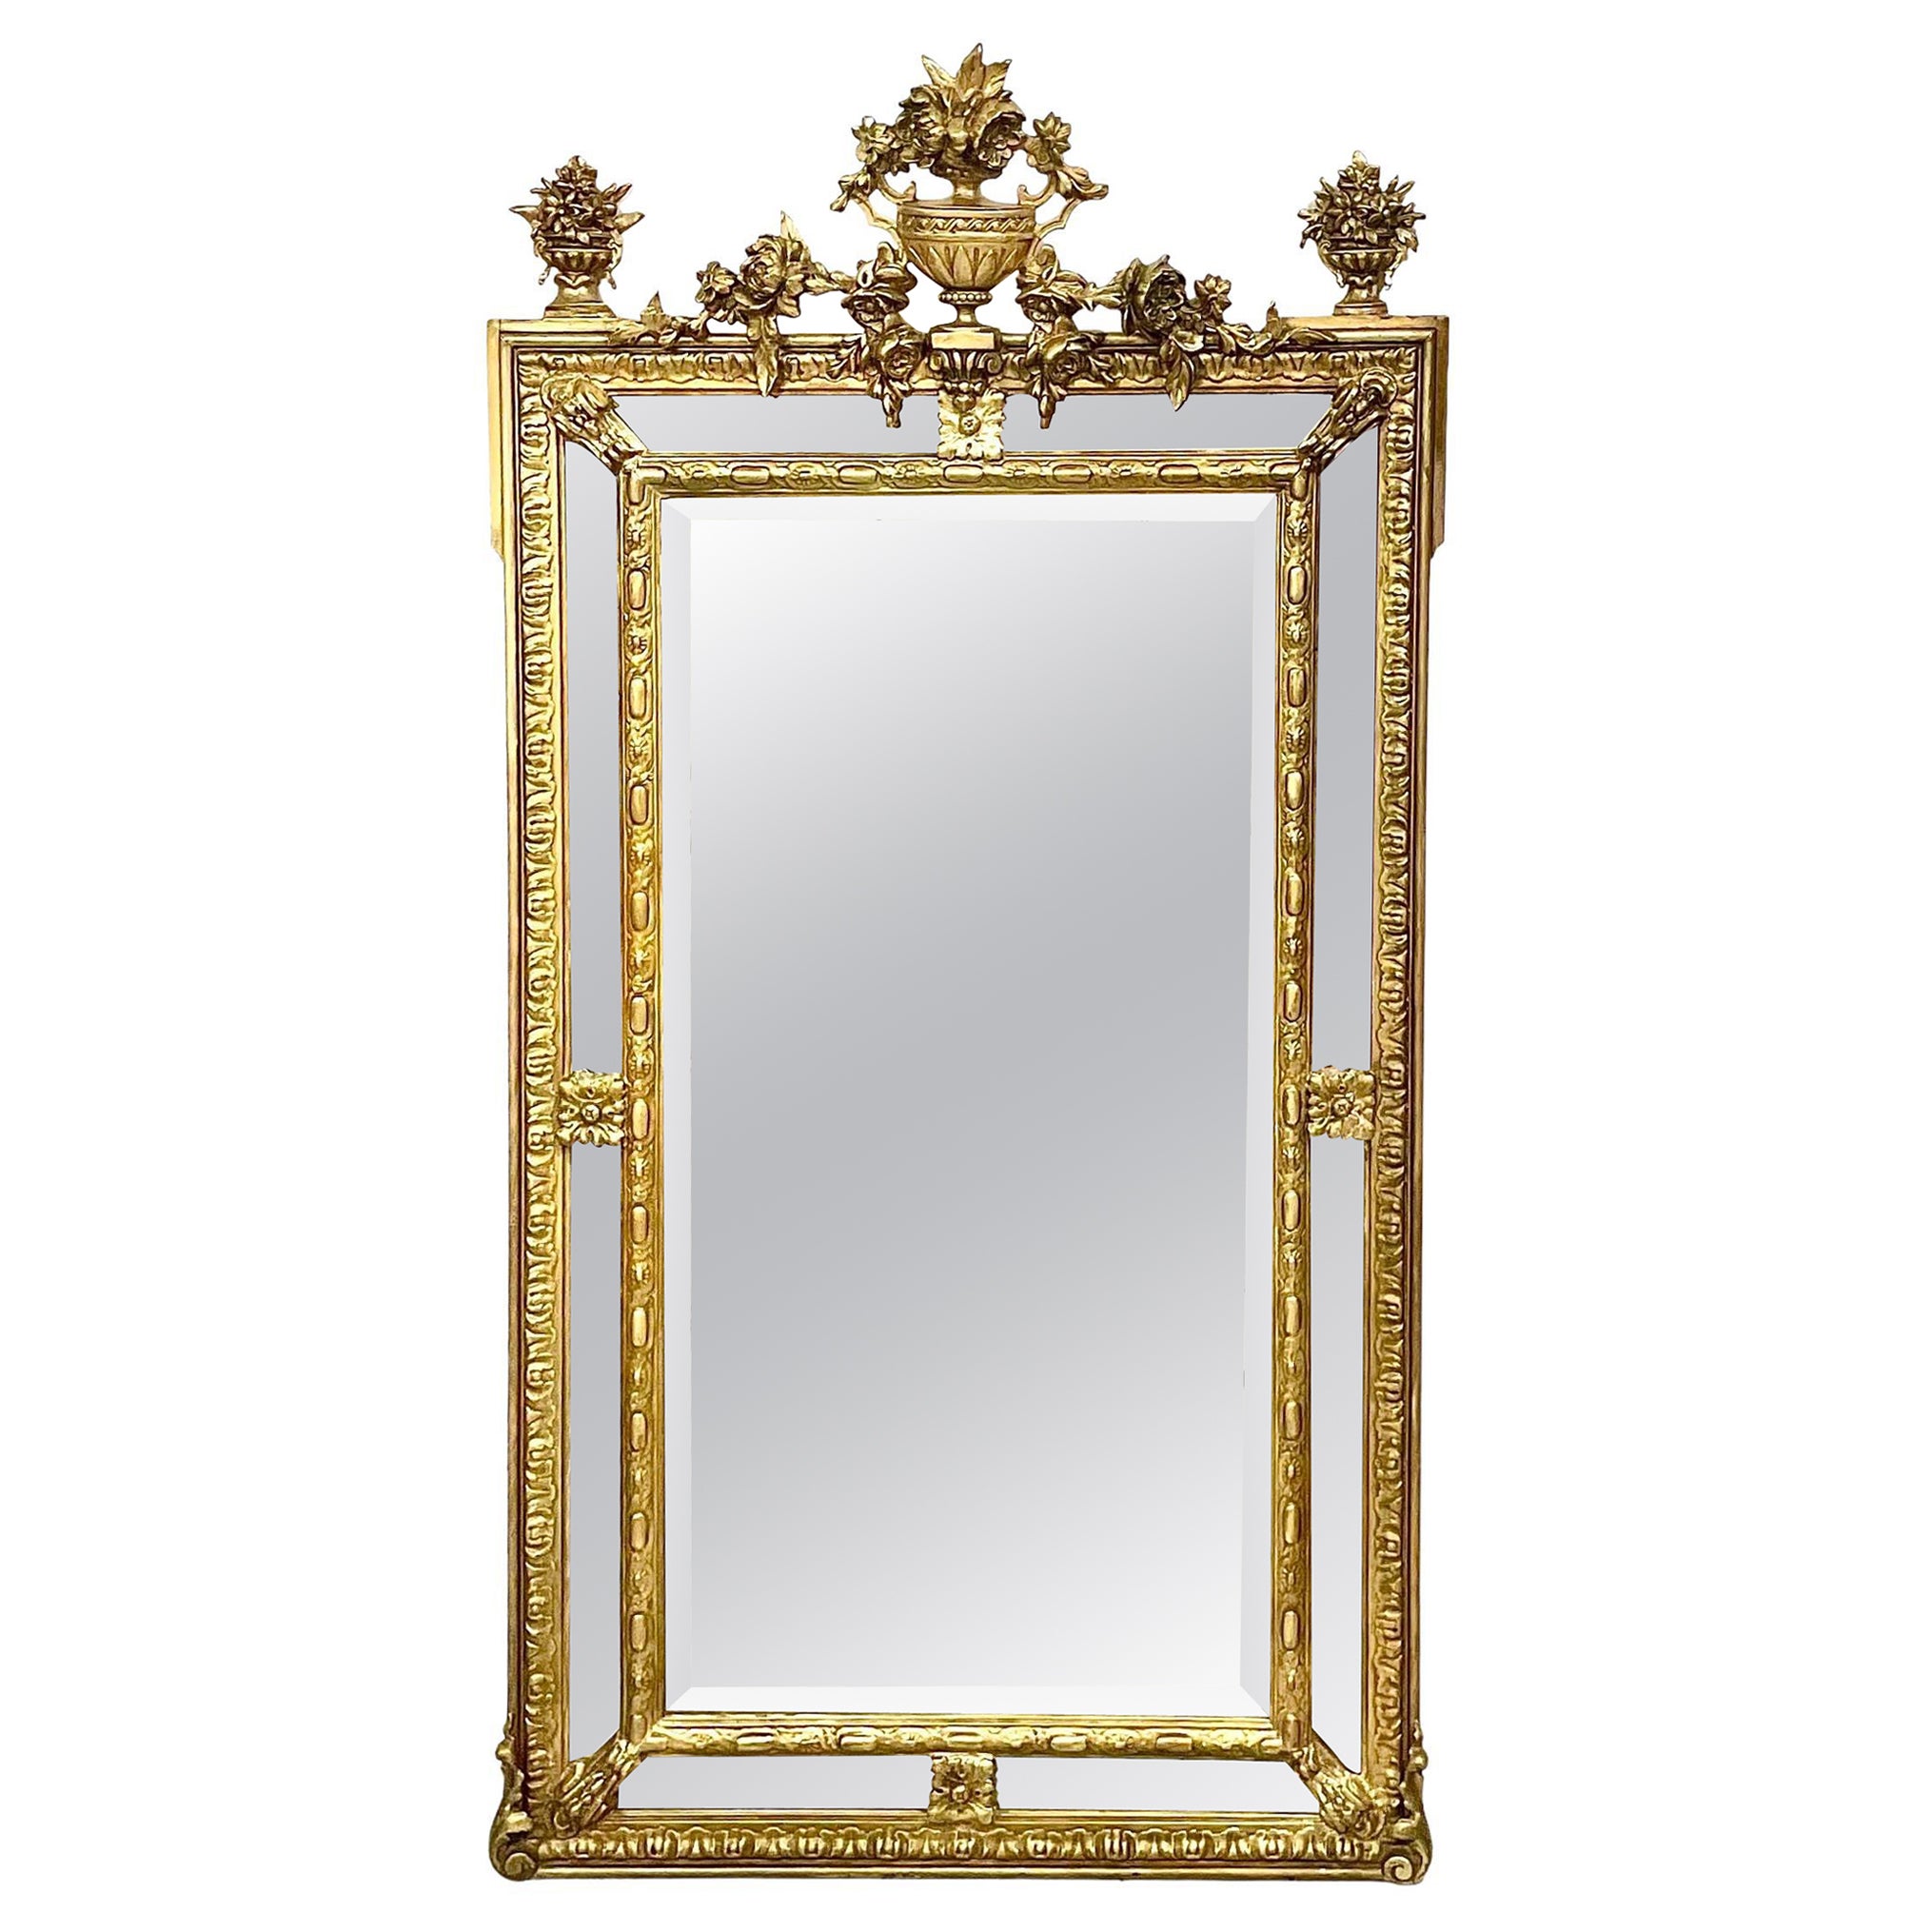 Miroir à parcloses d'époque Napoléon III en vente